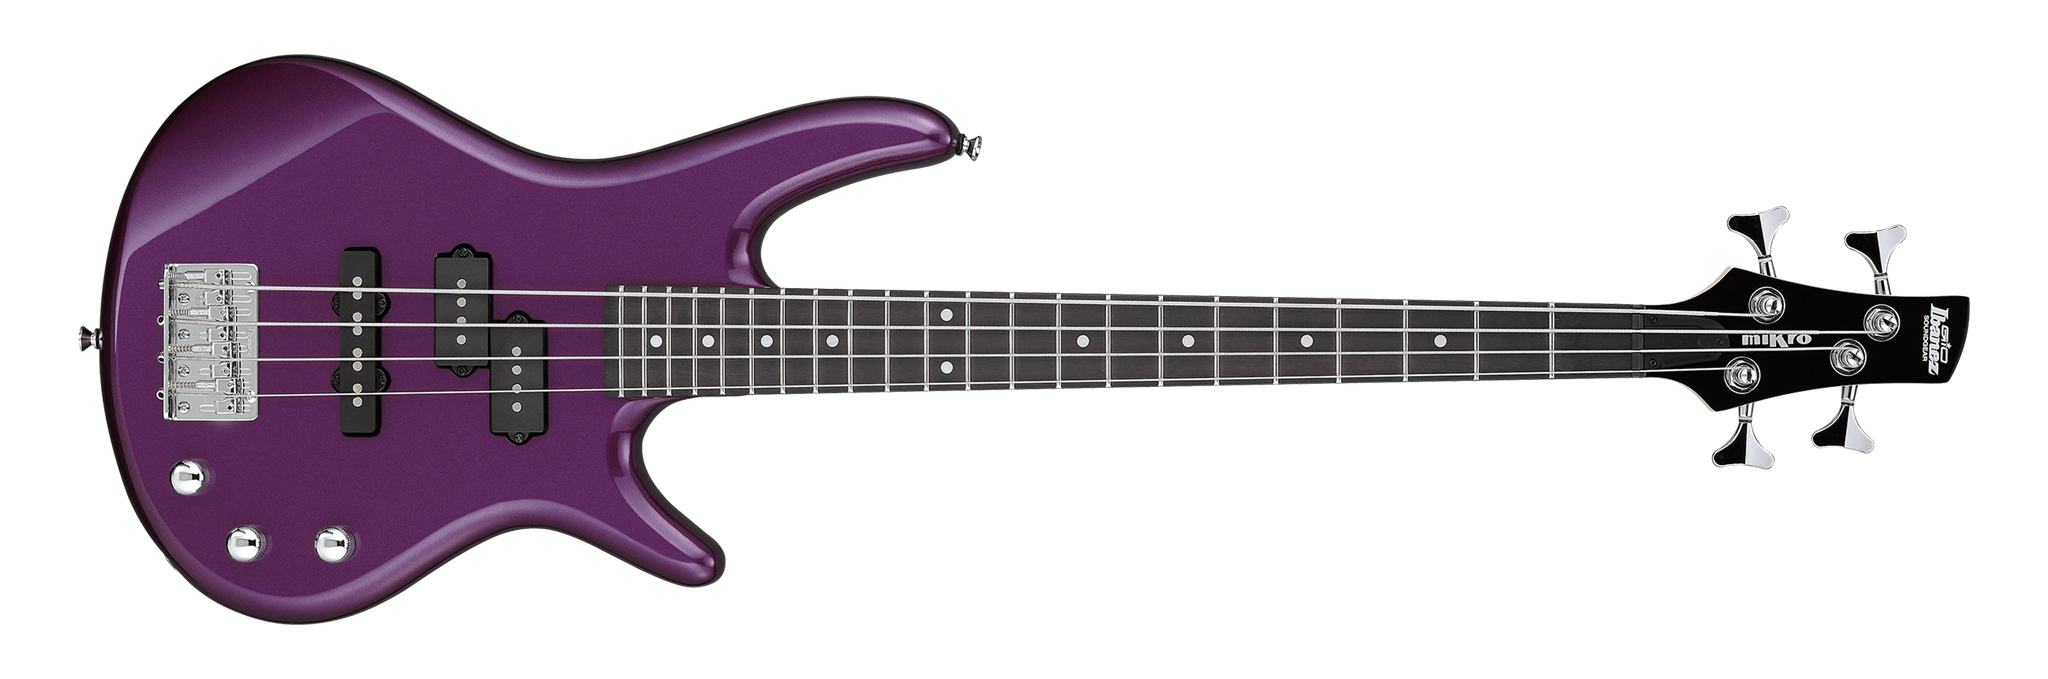 Ibanez MIKRO GSRM20 Metallic Purple 28.6 Inch Short Scale 4-String Electric Bass Guitar